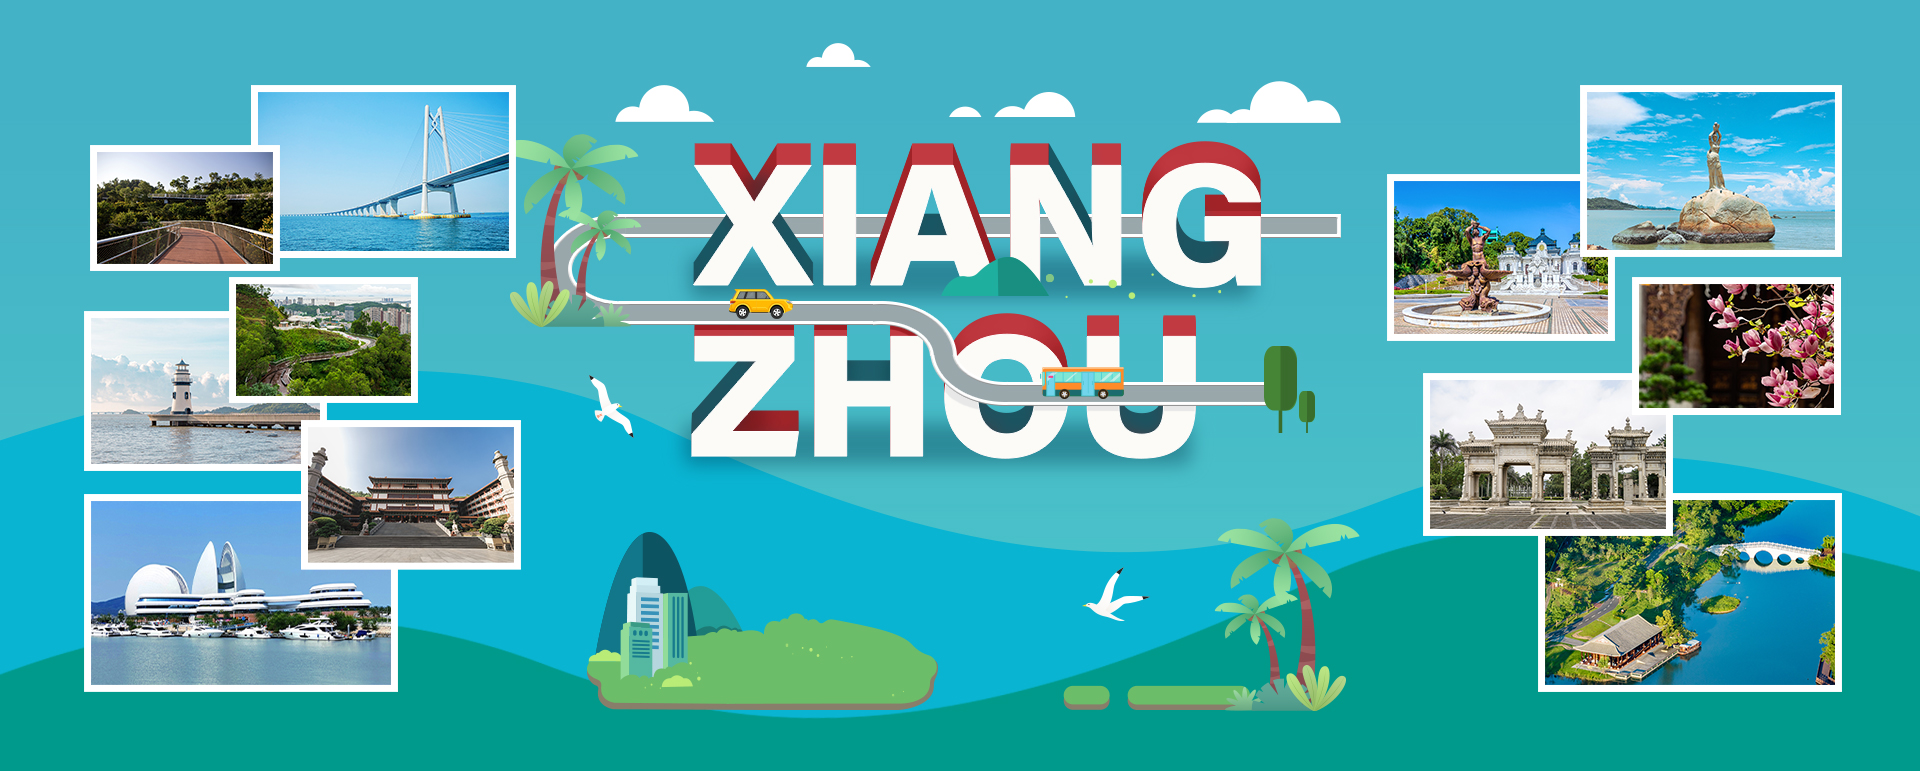 Visit top 10 scenic areas in Xiangzhou